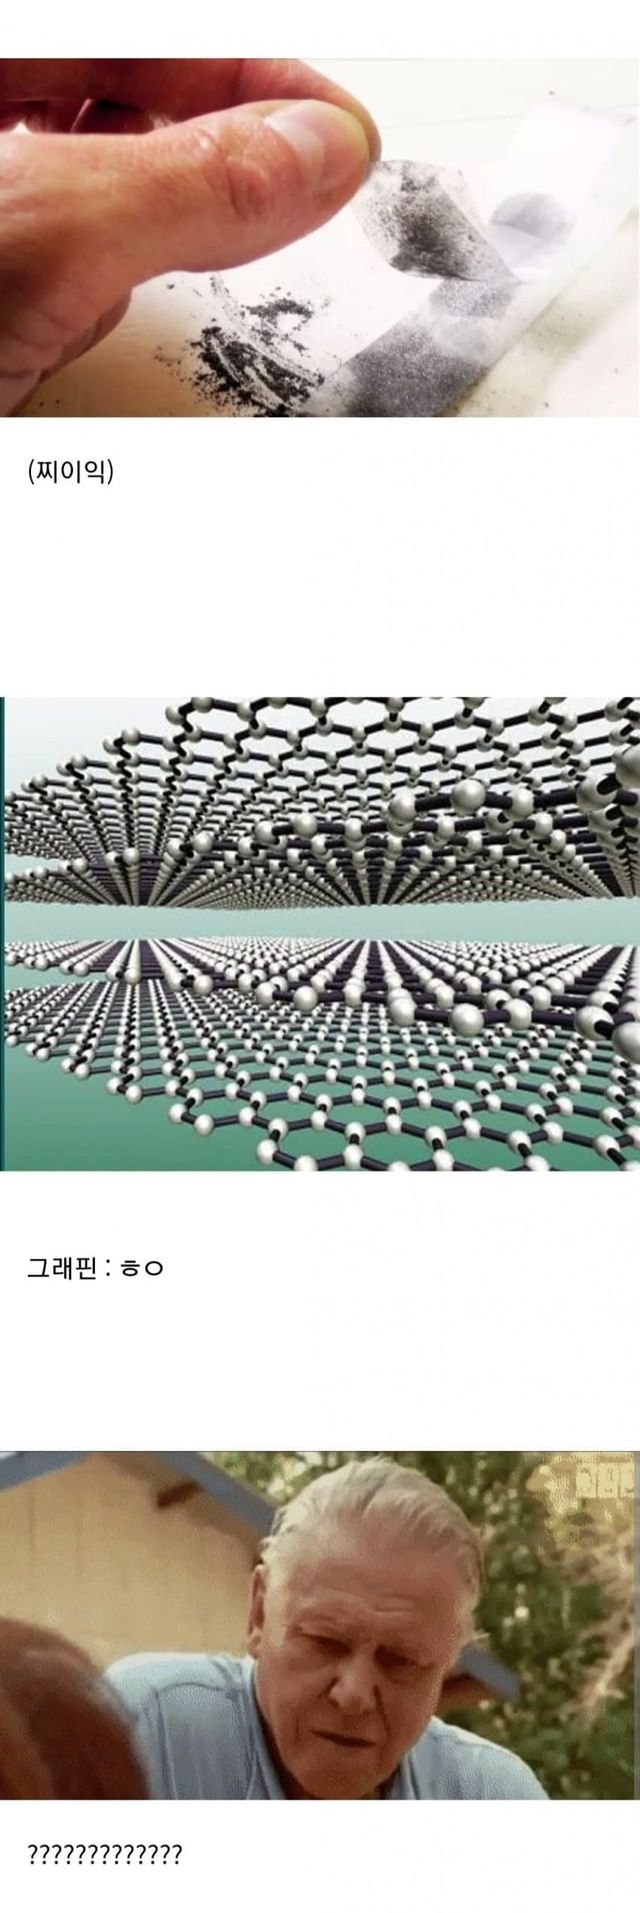 superconductor-20230801-170601-001-resize.jpg